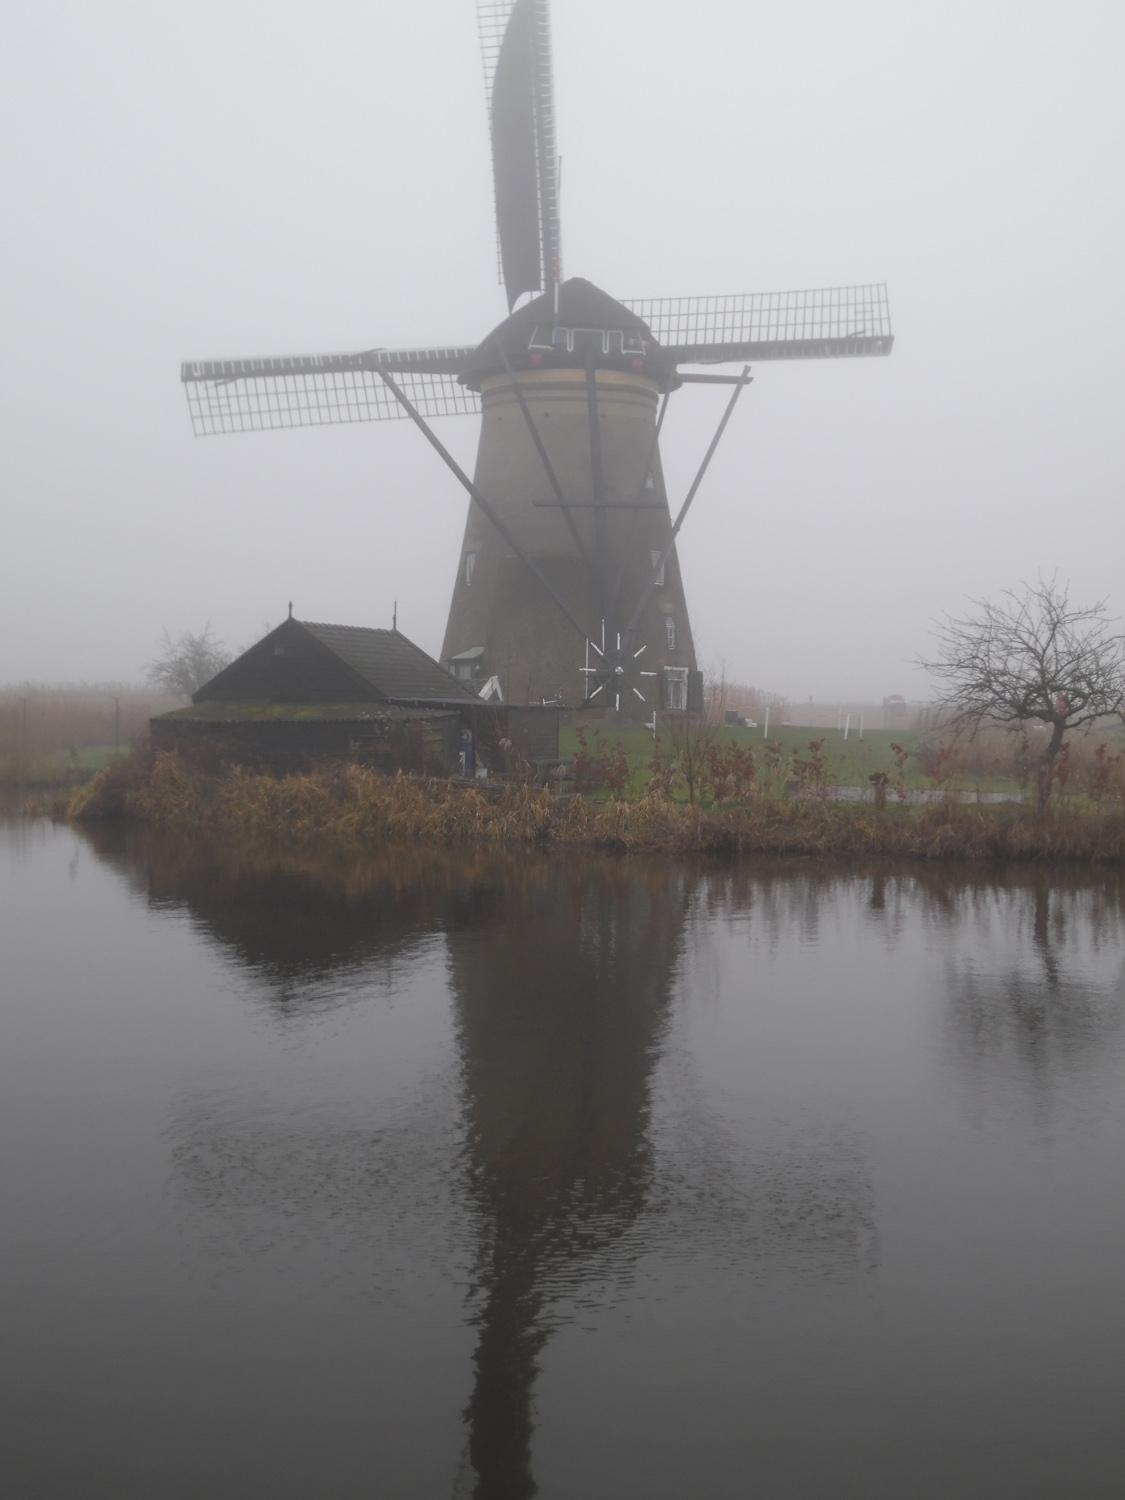 Visit to the Kinderdijk, 18th century windmills